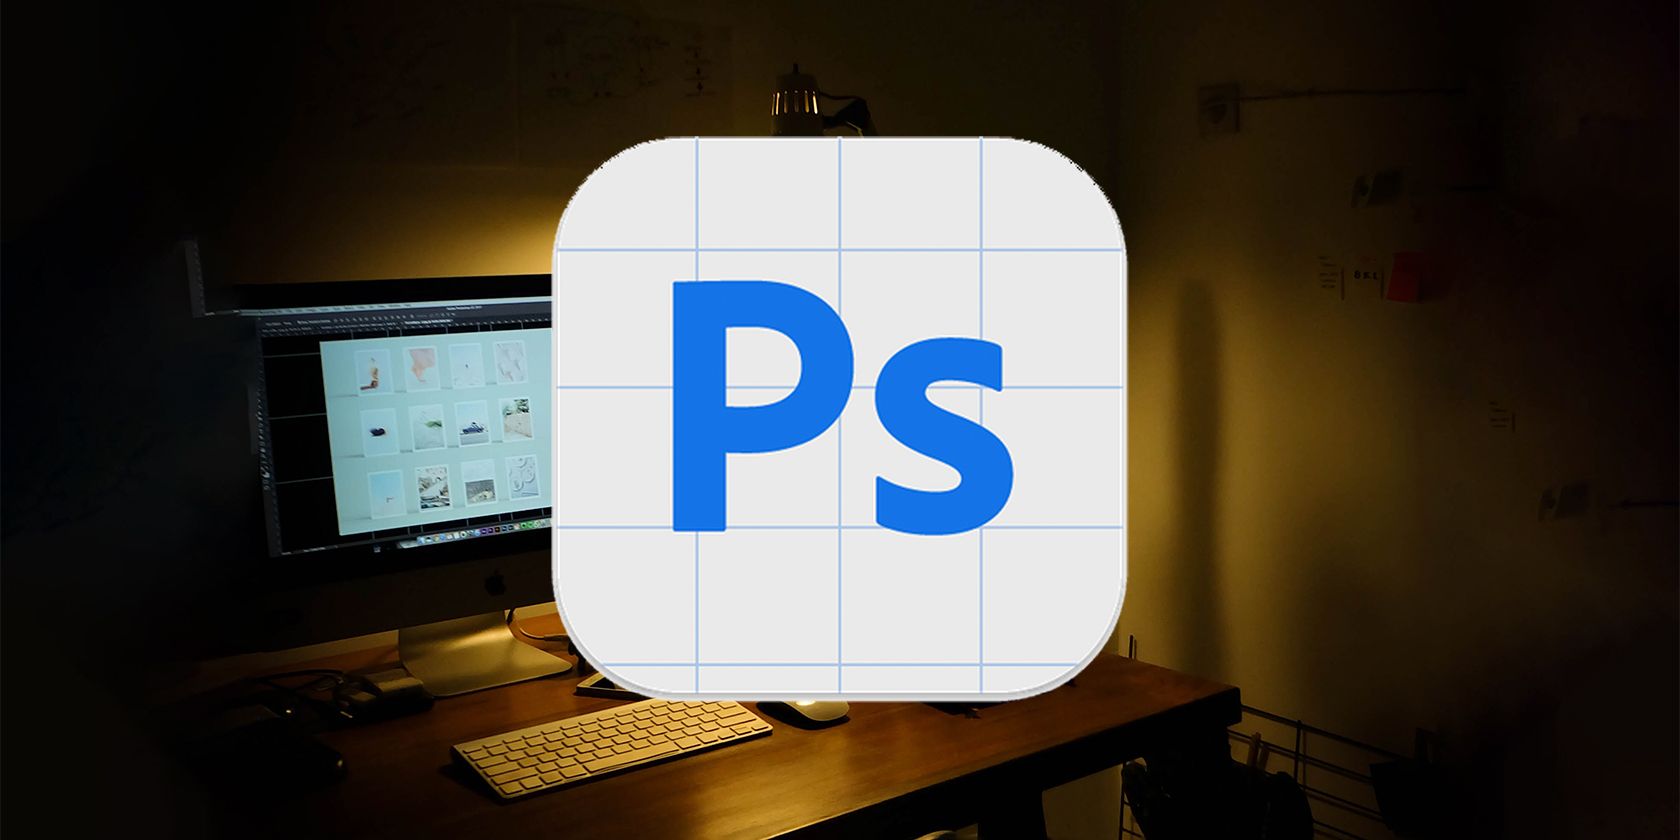 photoshop beta 2023 mac torrent